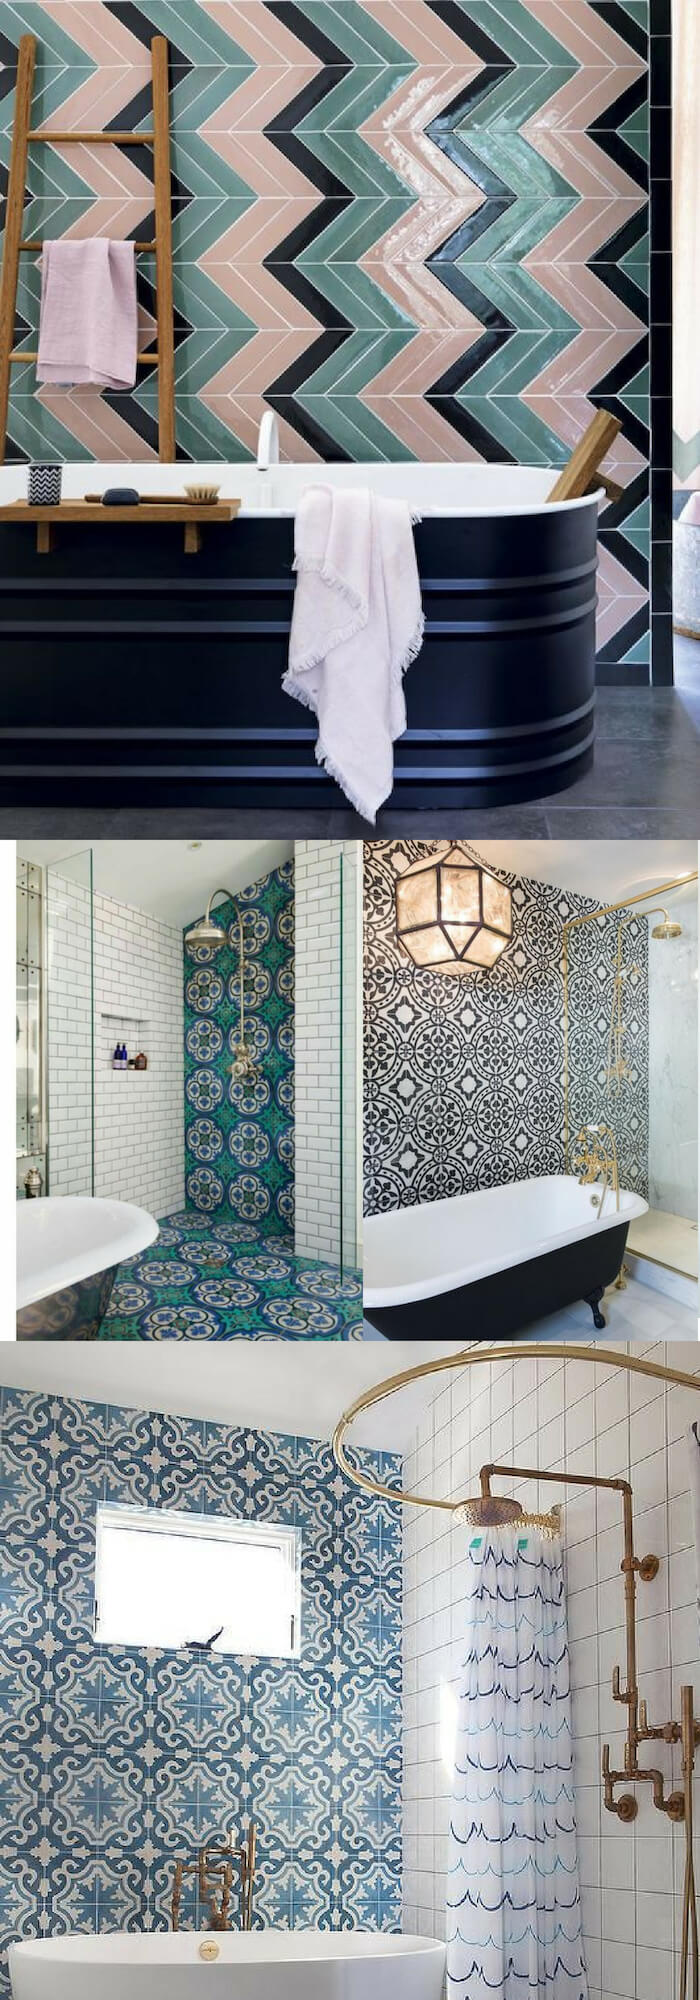 Vintage wall | Unique Wall Tile Ideas for Bathroom Design